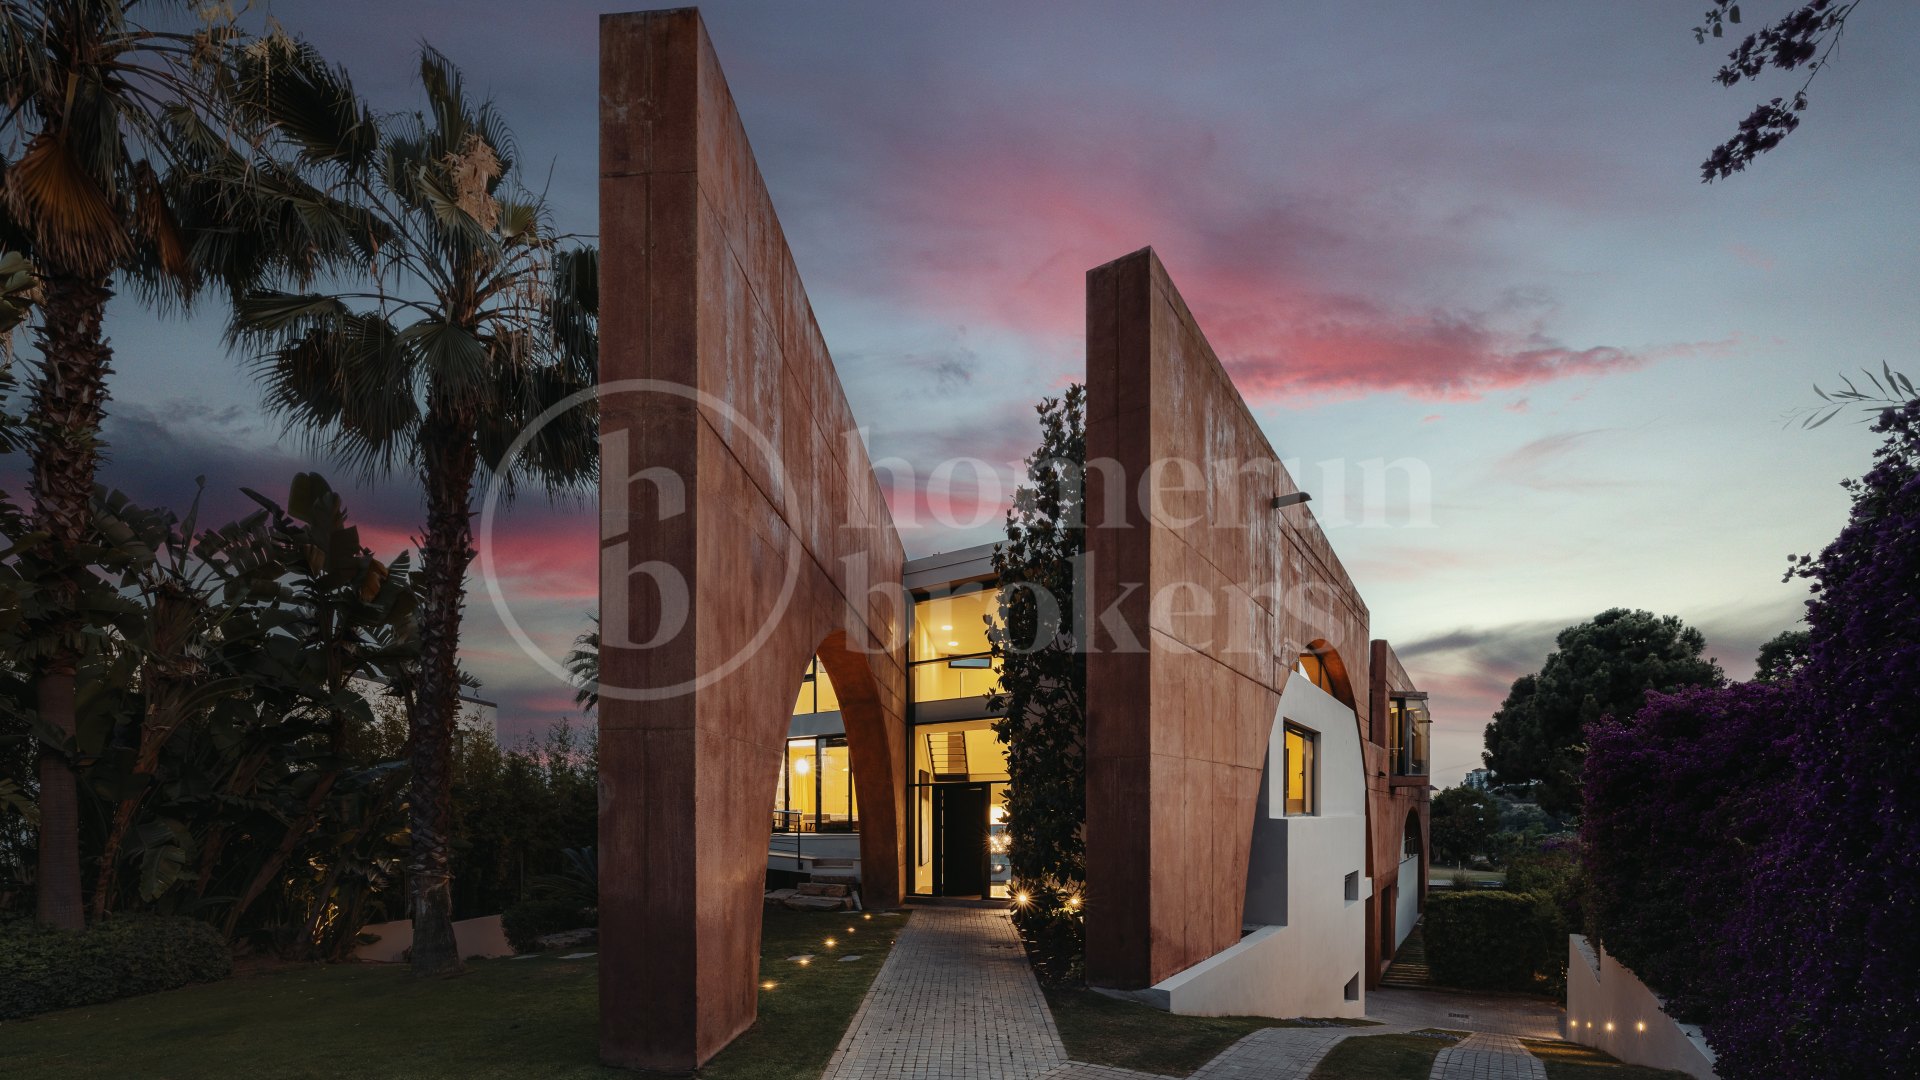 Villa Futura - Spectacular Eco-Luxury Villa with Breathtaking Views